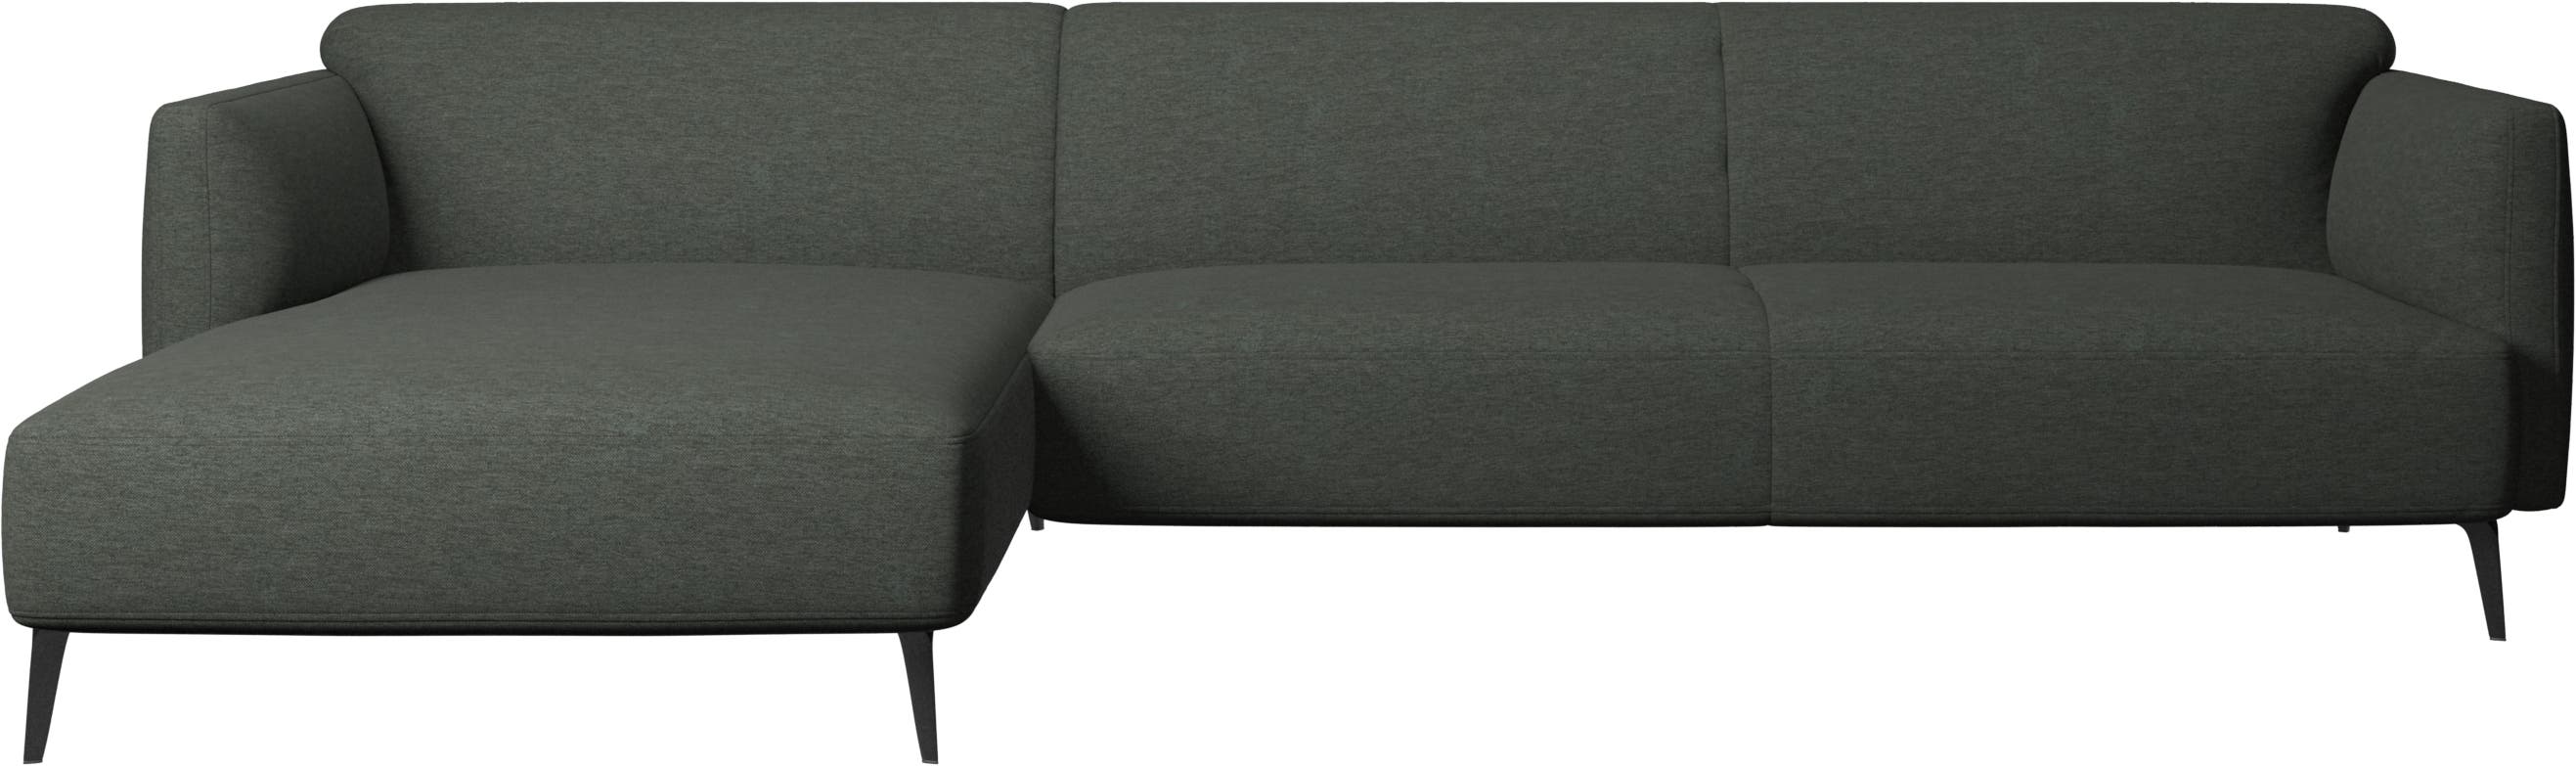 Modena sofá com módulo chaise-longue